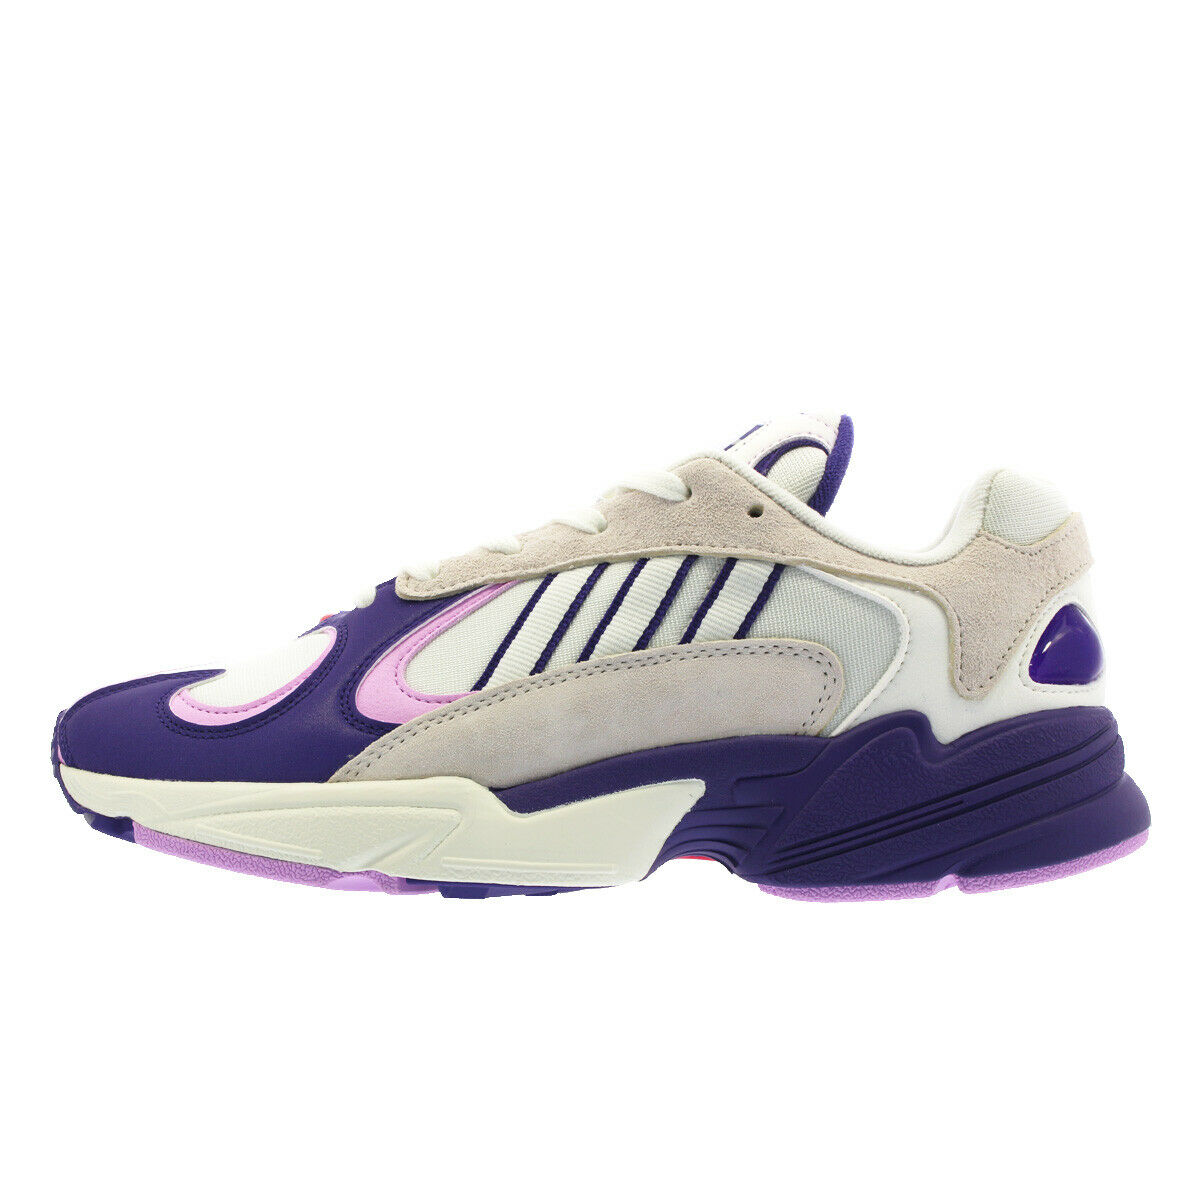 Adidas Dragon Ball Z x Yung-1 'Frieza' D97048 Men's 11.5US Shoes 100%AUTHENTIC